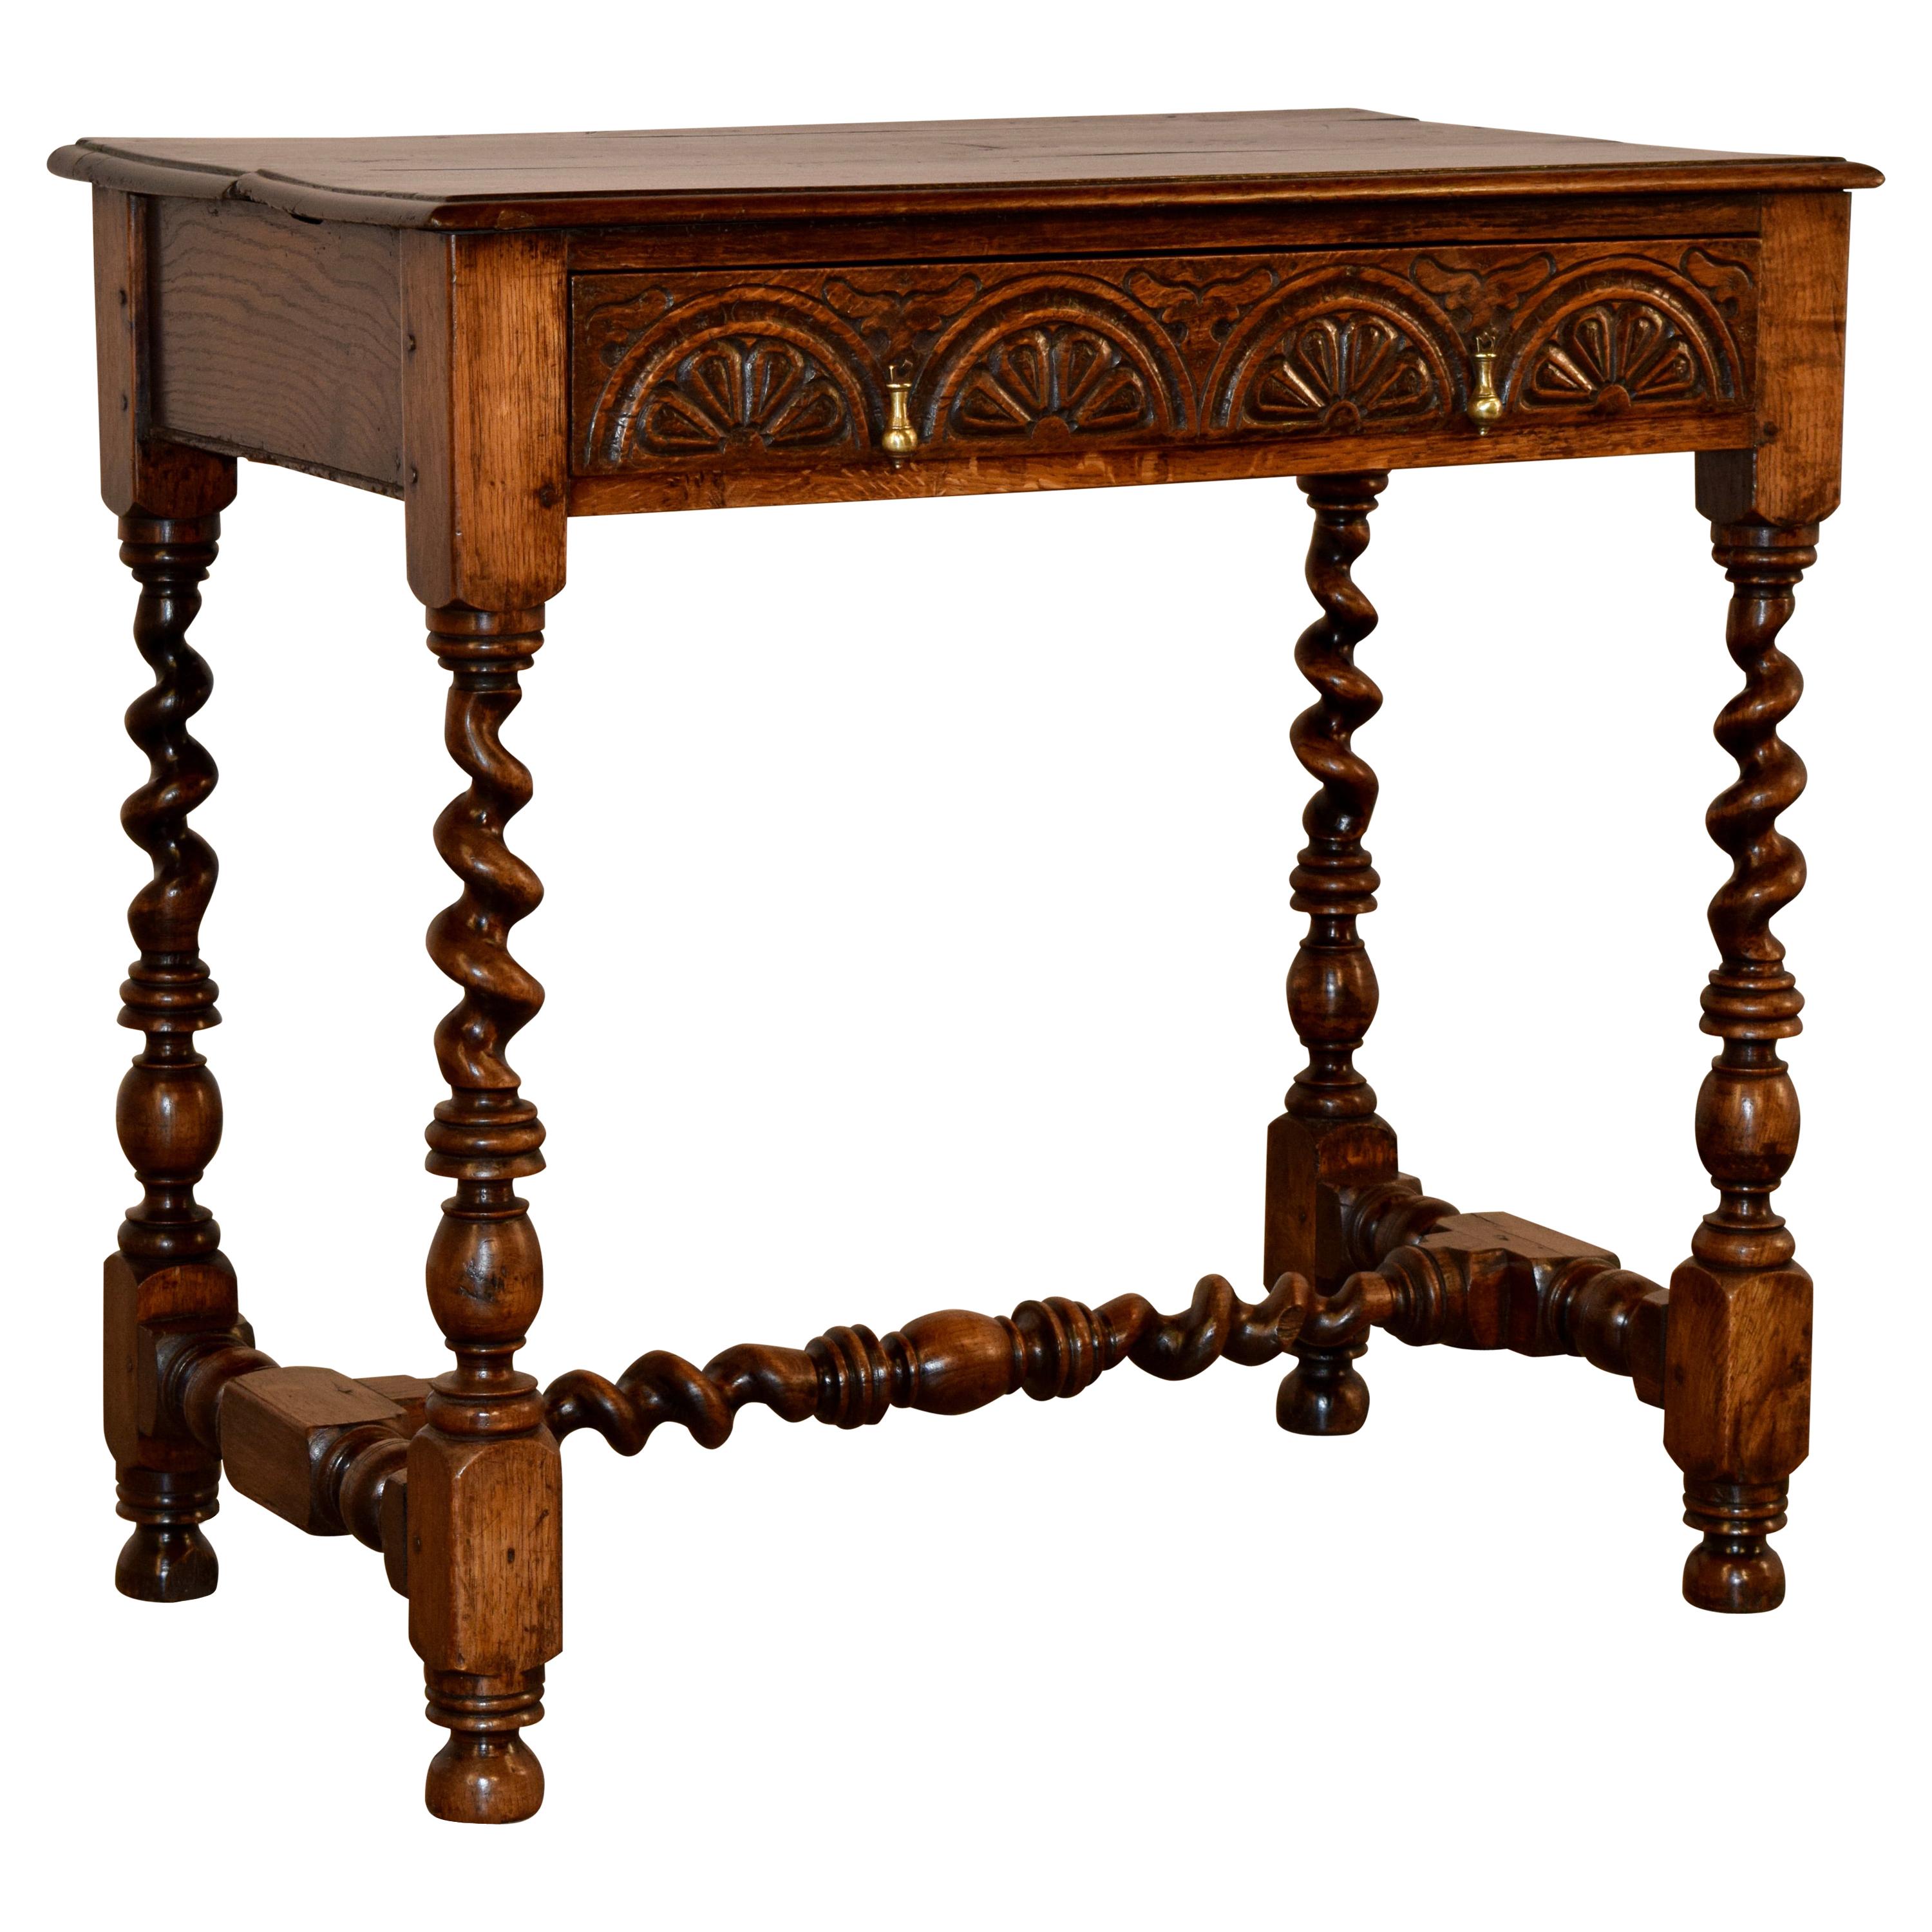 17th Century English Oak Side Table